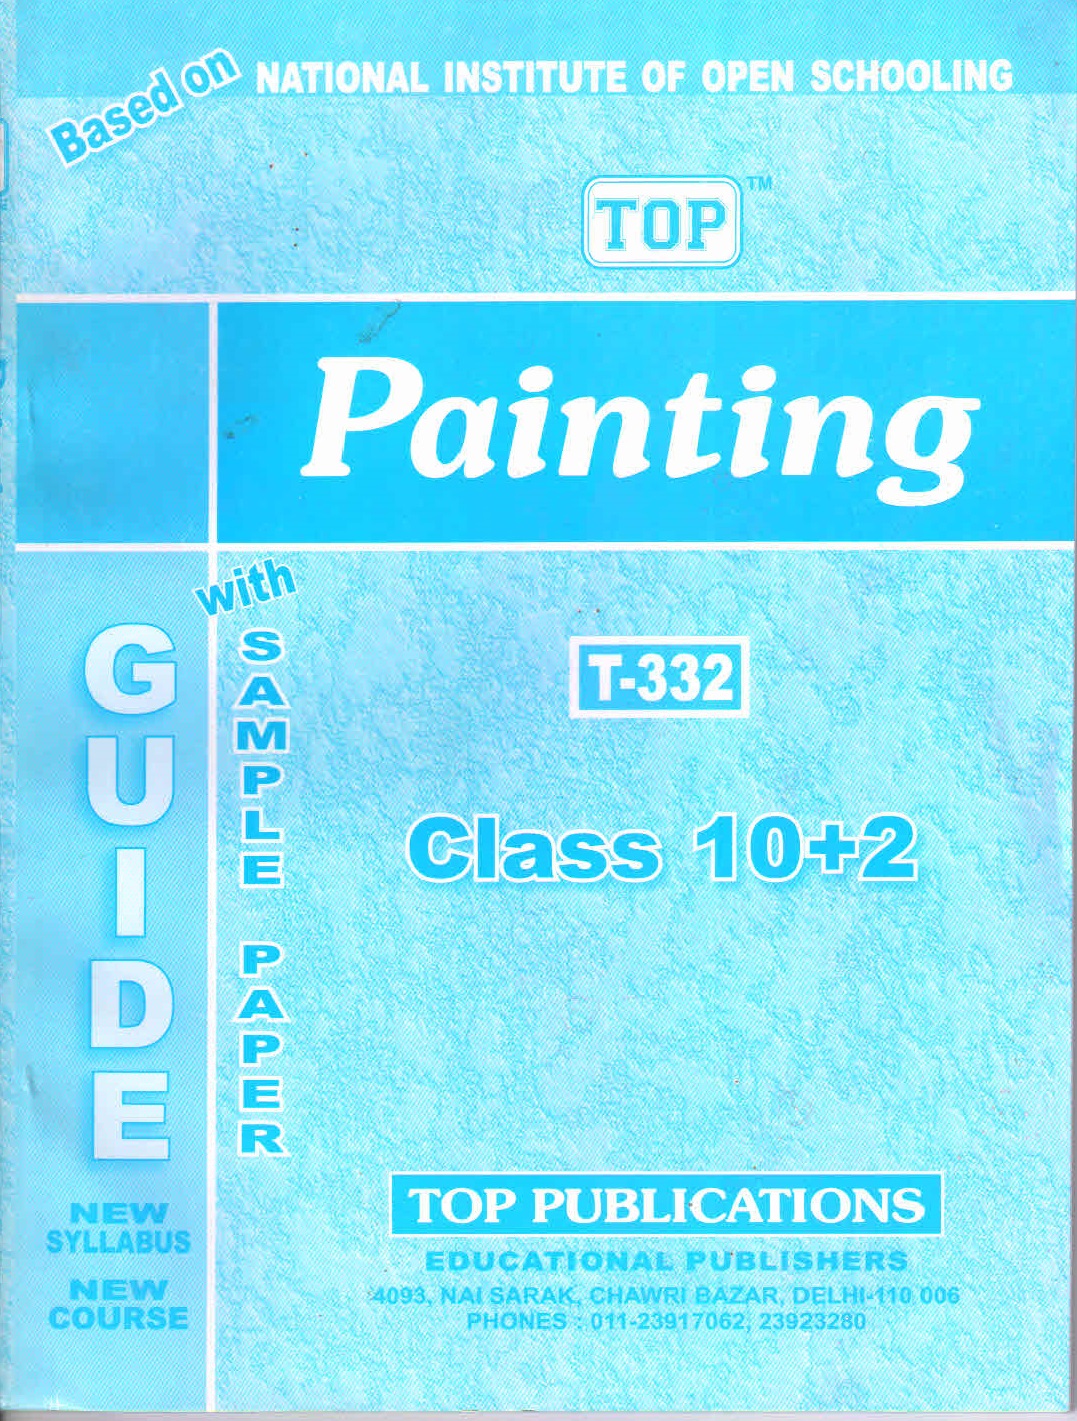 BUY! Nios Guide Books Free Exam Revision Books (Kunji) –Exam Preparation 12th Painting Help Books